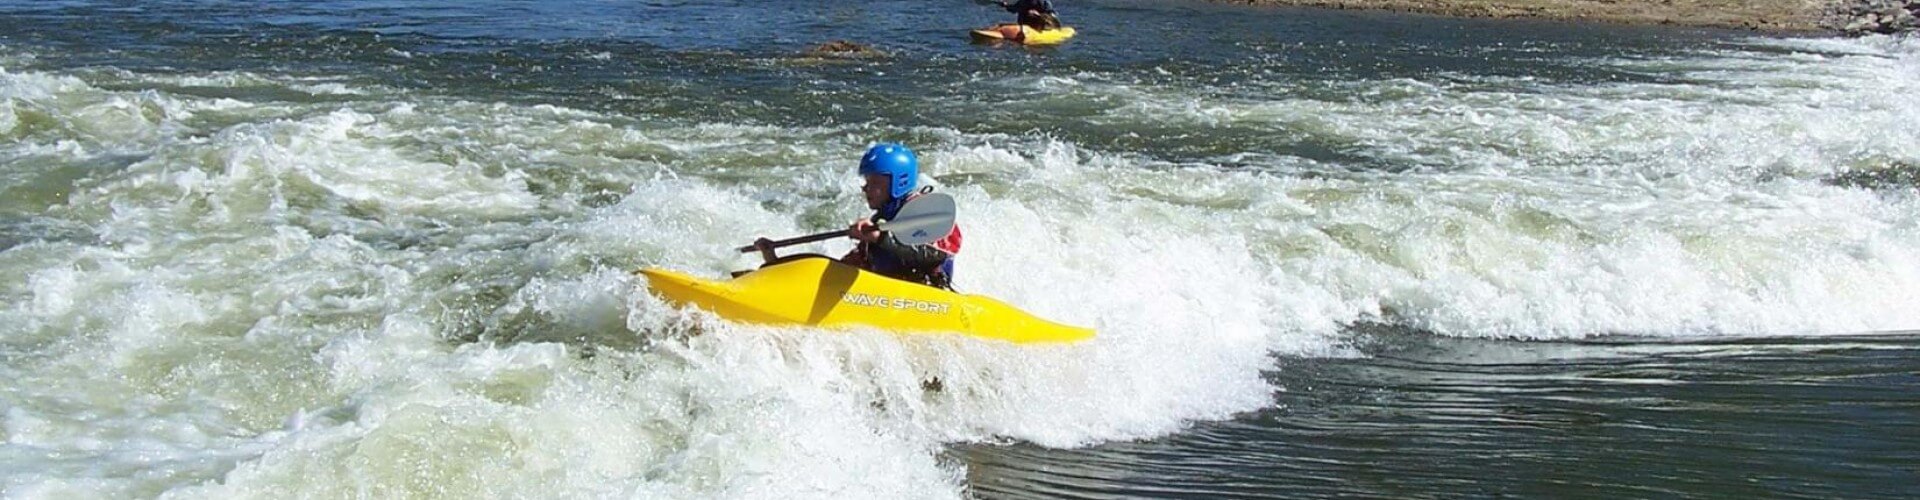 Kayaking, Canoeing, Rafting & Tubing on the Green River